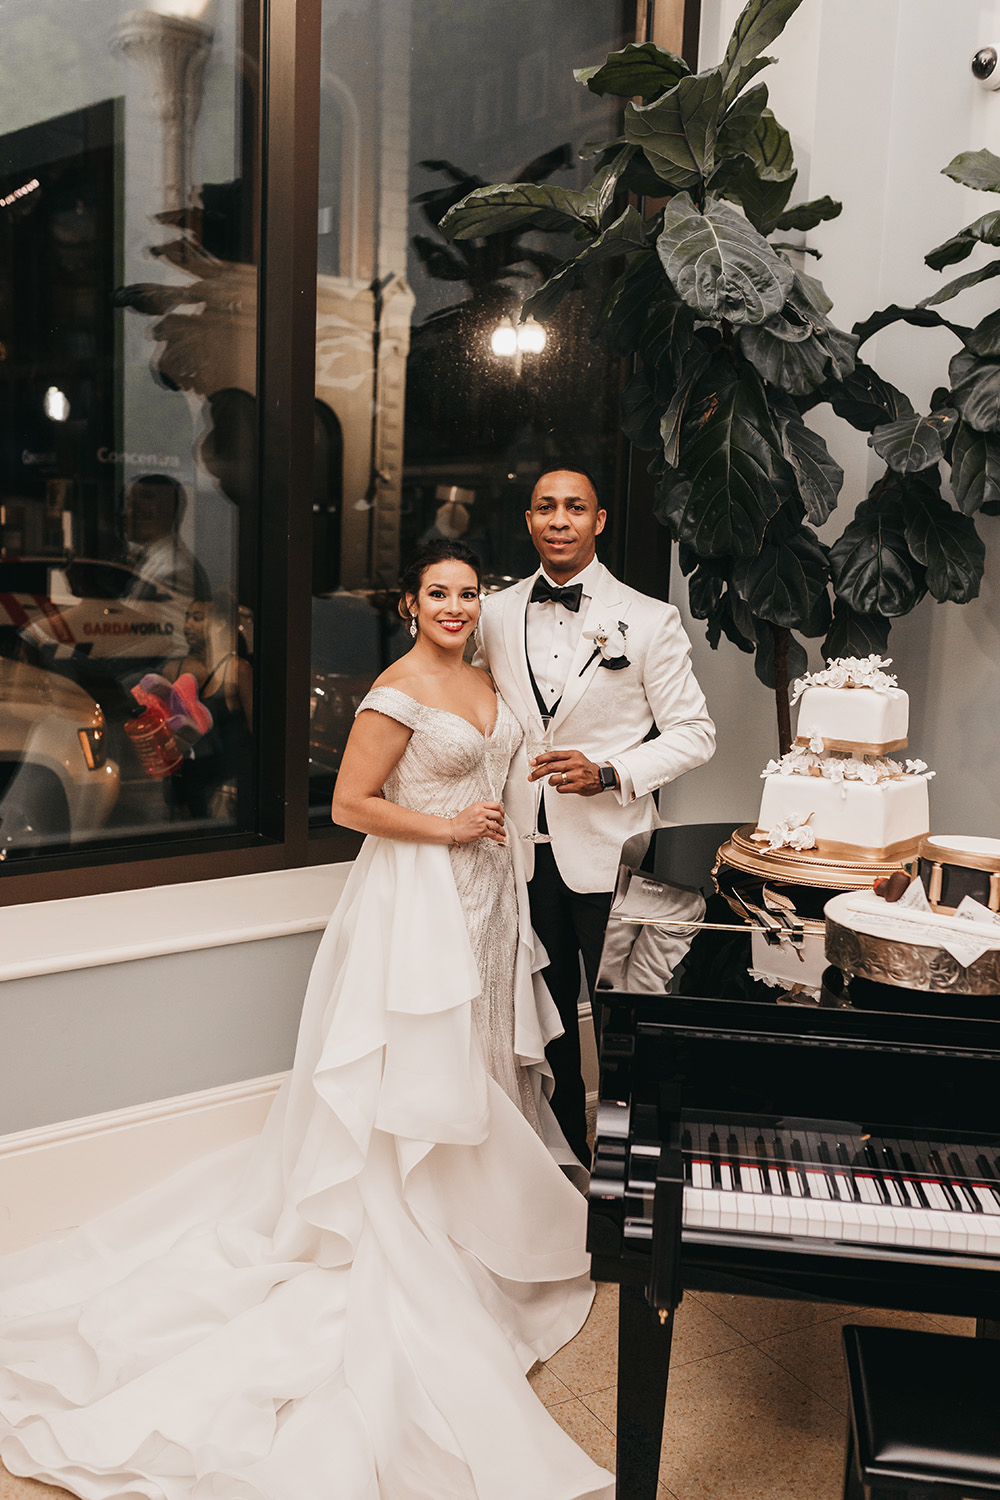 Melanie and Duke cut their wedding cake in the NOPSI Hotel lobby.